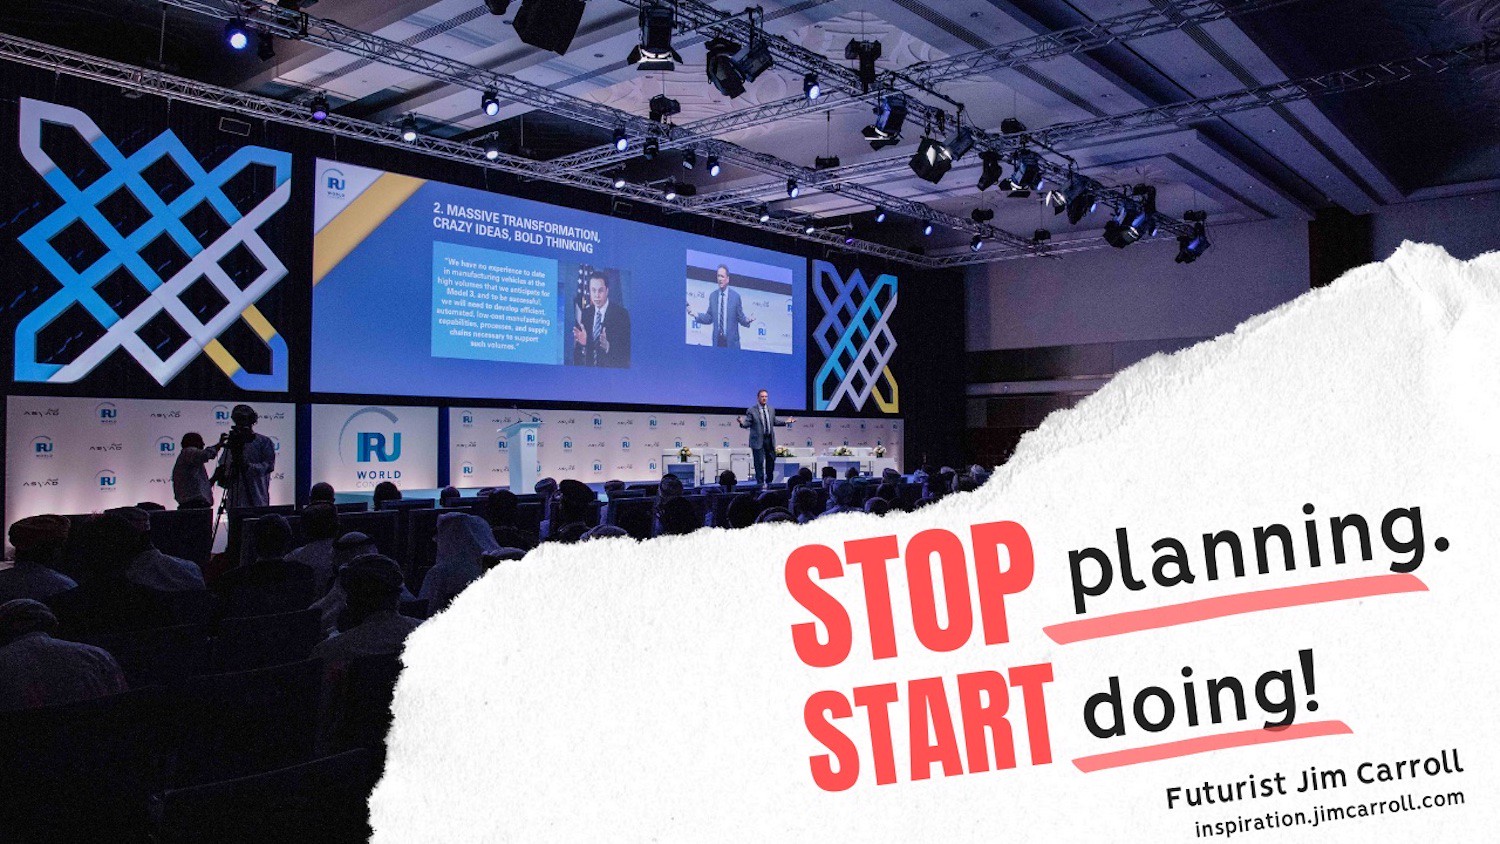 "STOP planning. START doing!" - Futurist Jim Carroll